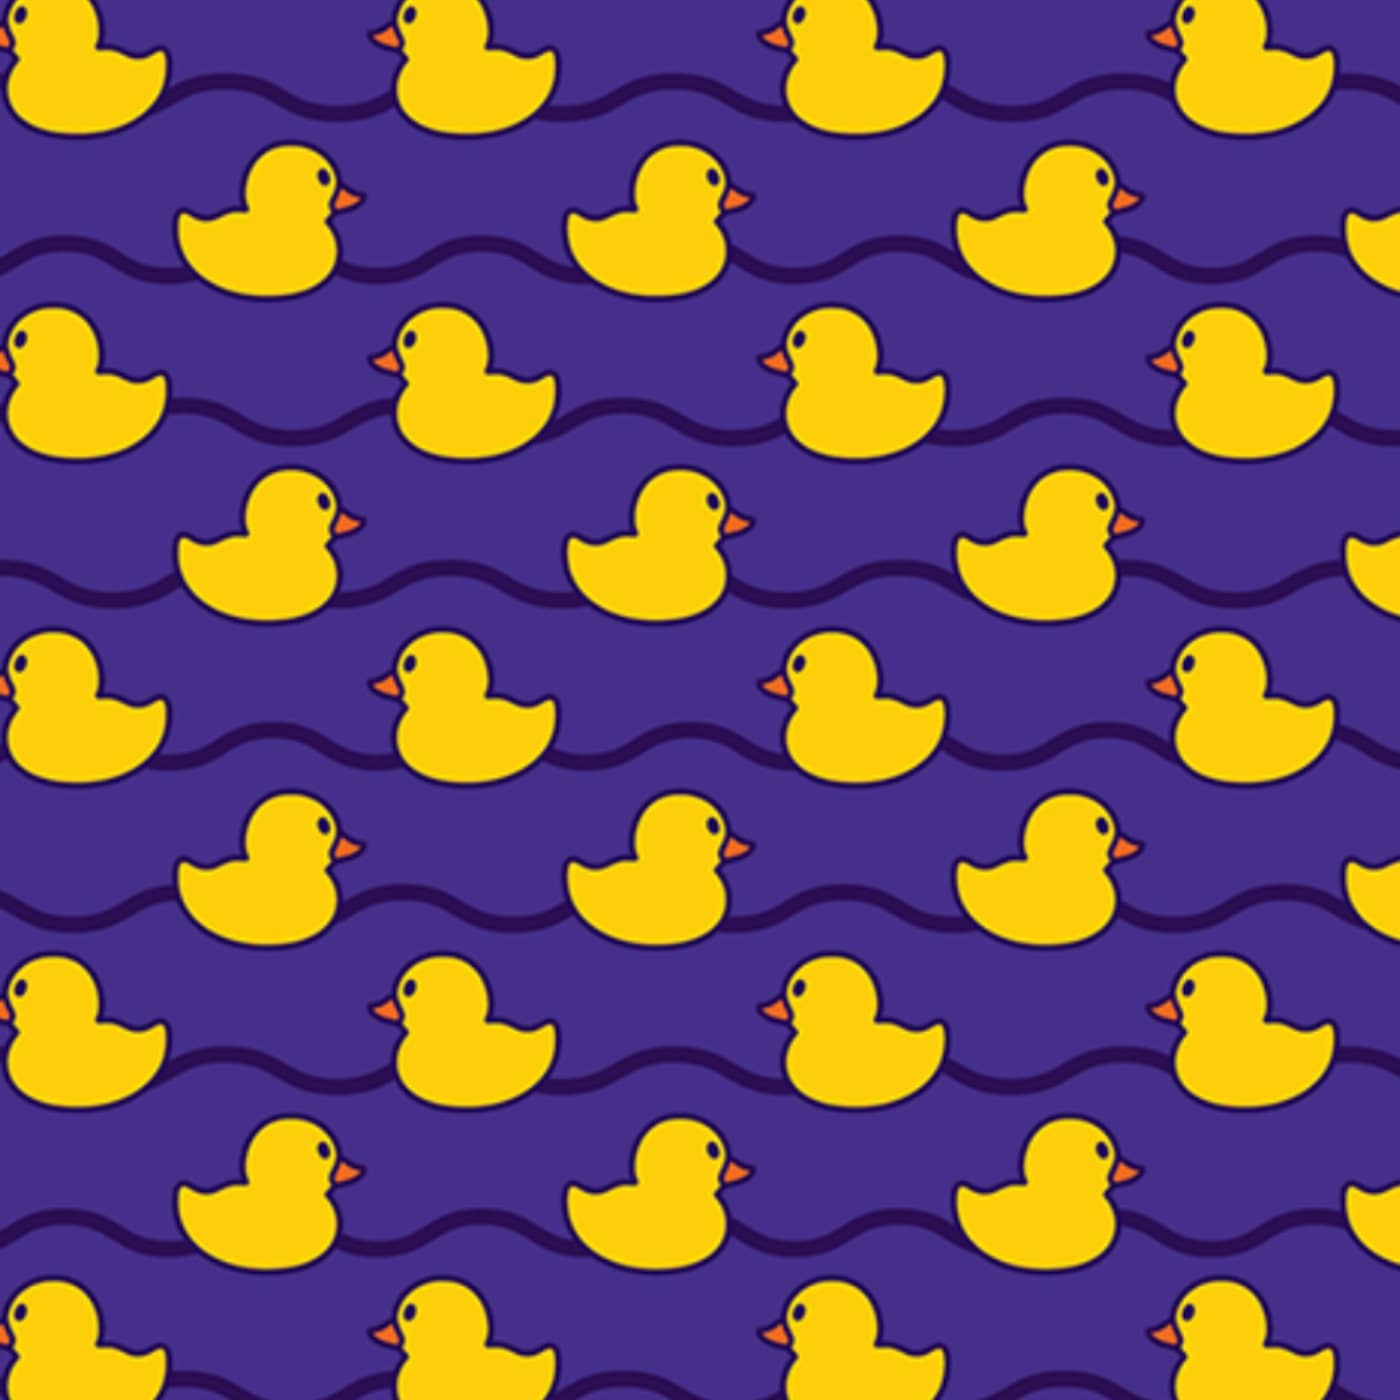 Yellow-Ducky-Yellow-Duck-Rubber-Duck-Rubber-Ducky-Vintage-Inspired-Kitsch-RainbowsAndFairies.com.au-DUCKY_YEL-01